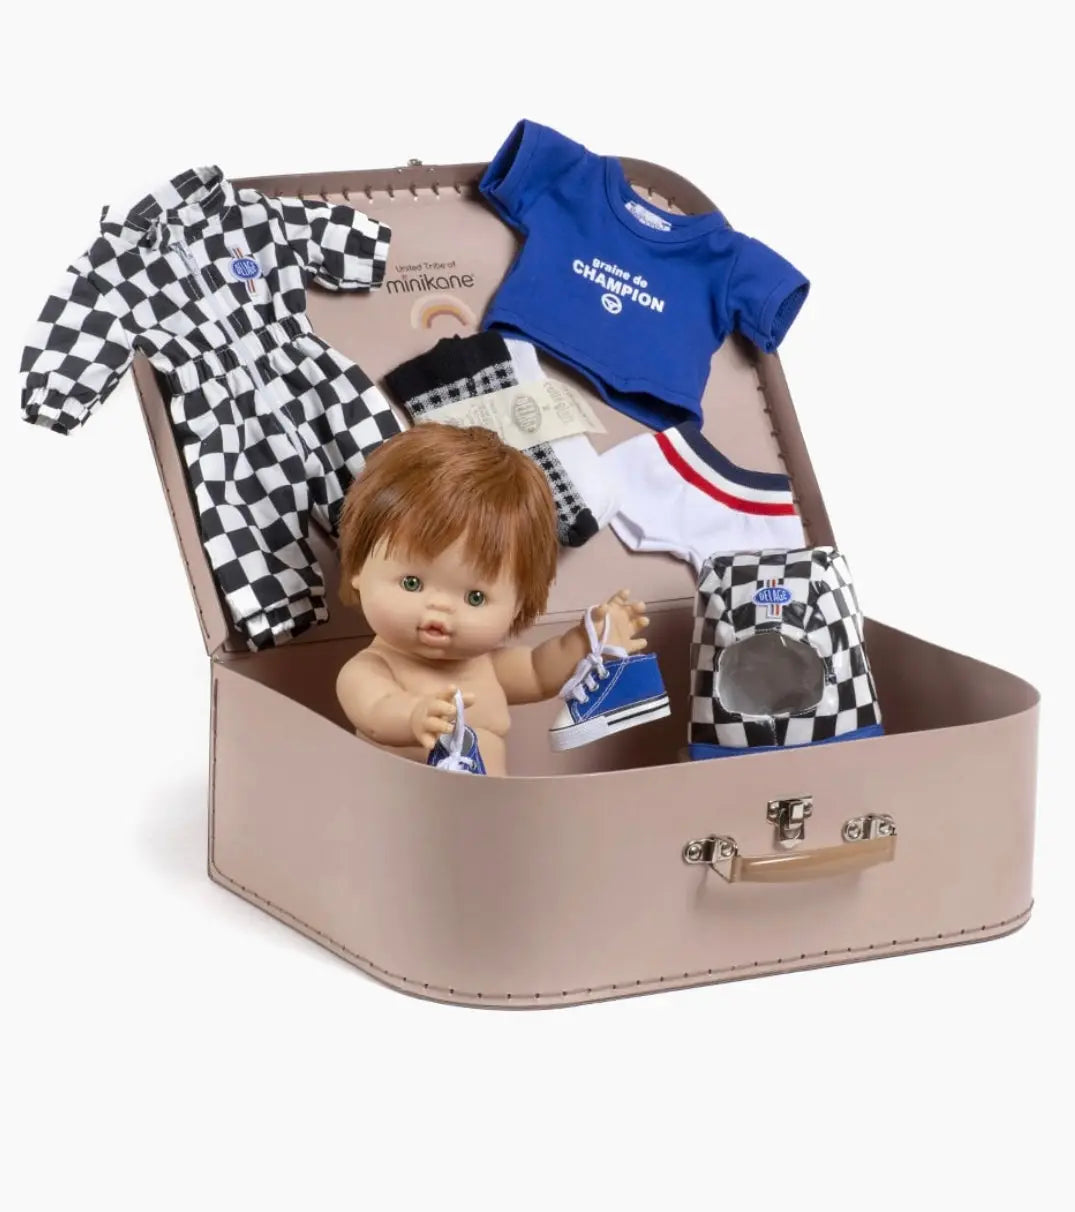 Minikane X Delage – My Suitcase from yesteryear “Racing” Boy Baby Doll  Minikane   